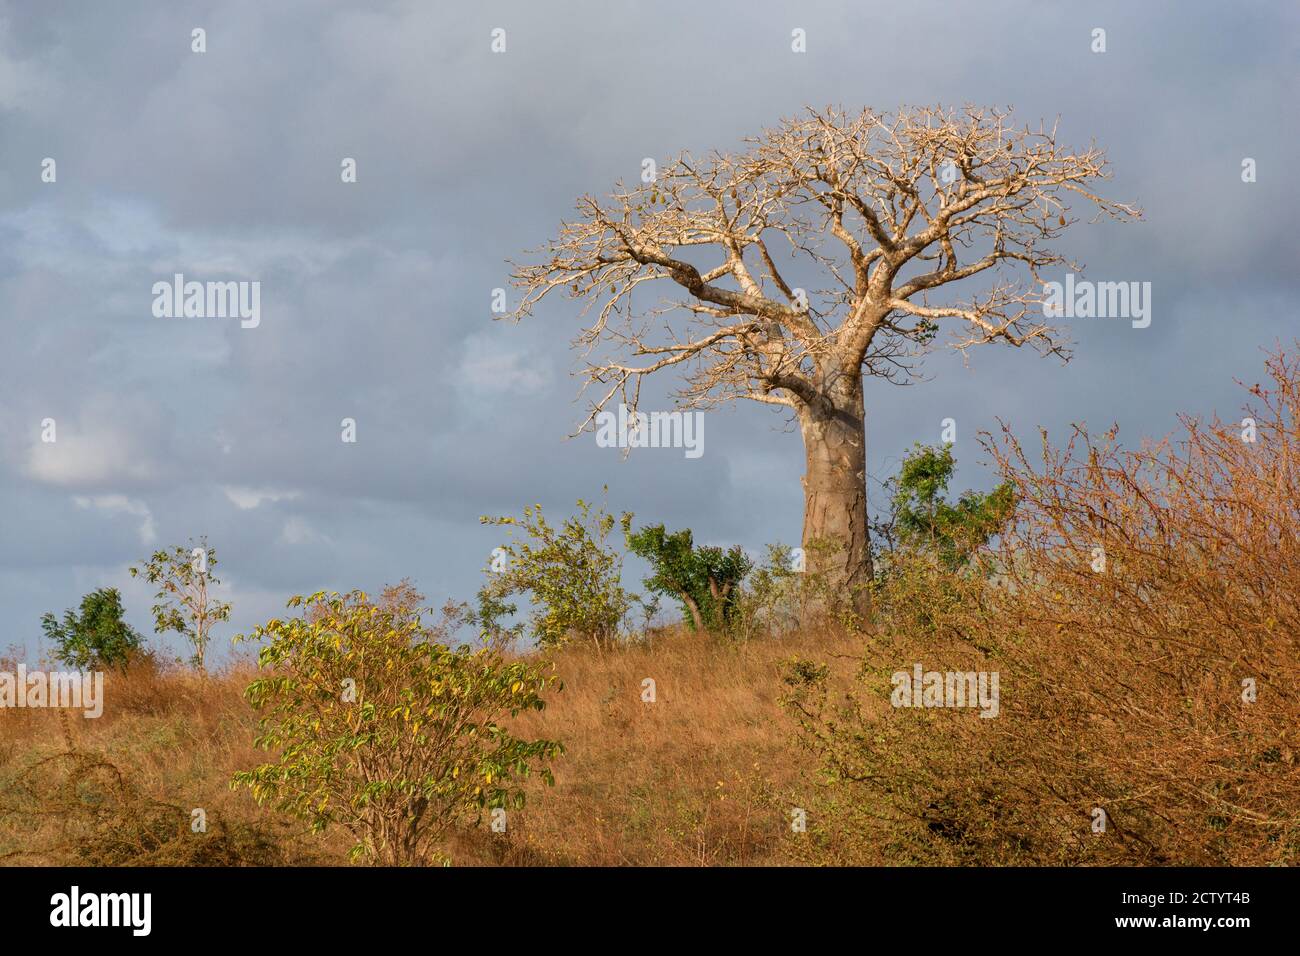 A large baobab tree (Adansonia digitata) in afternoon light, Kenya, East Africa Stock Photo